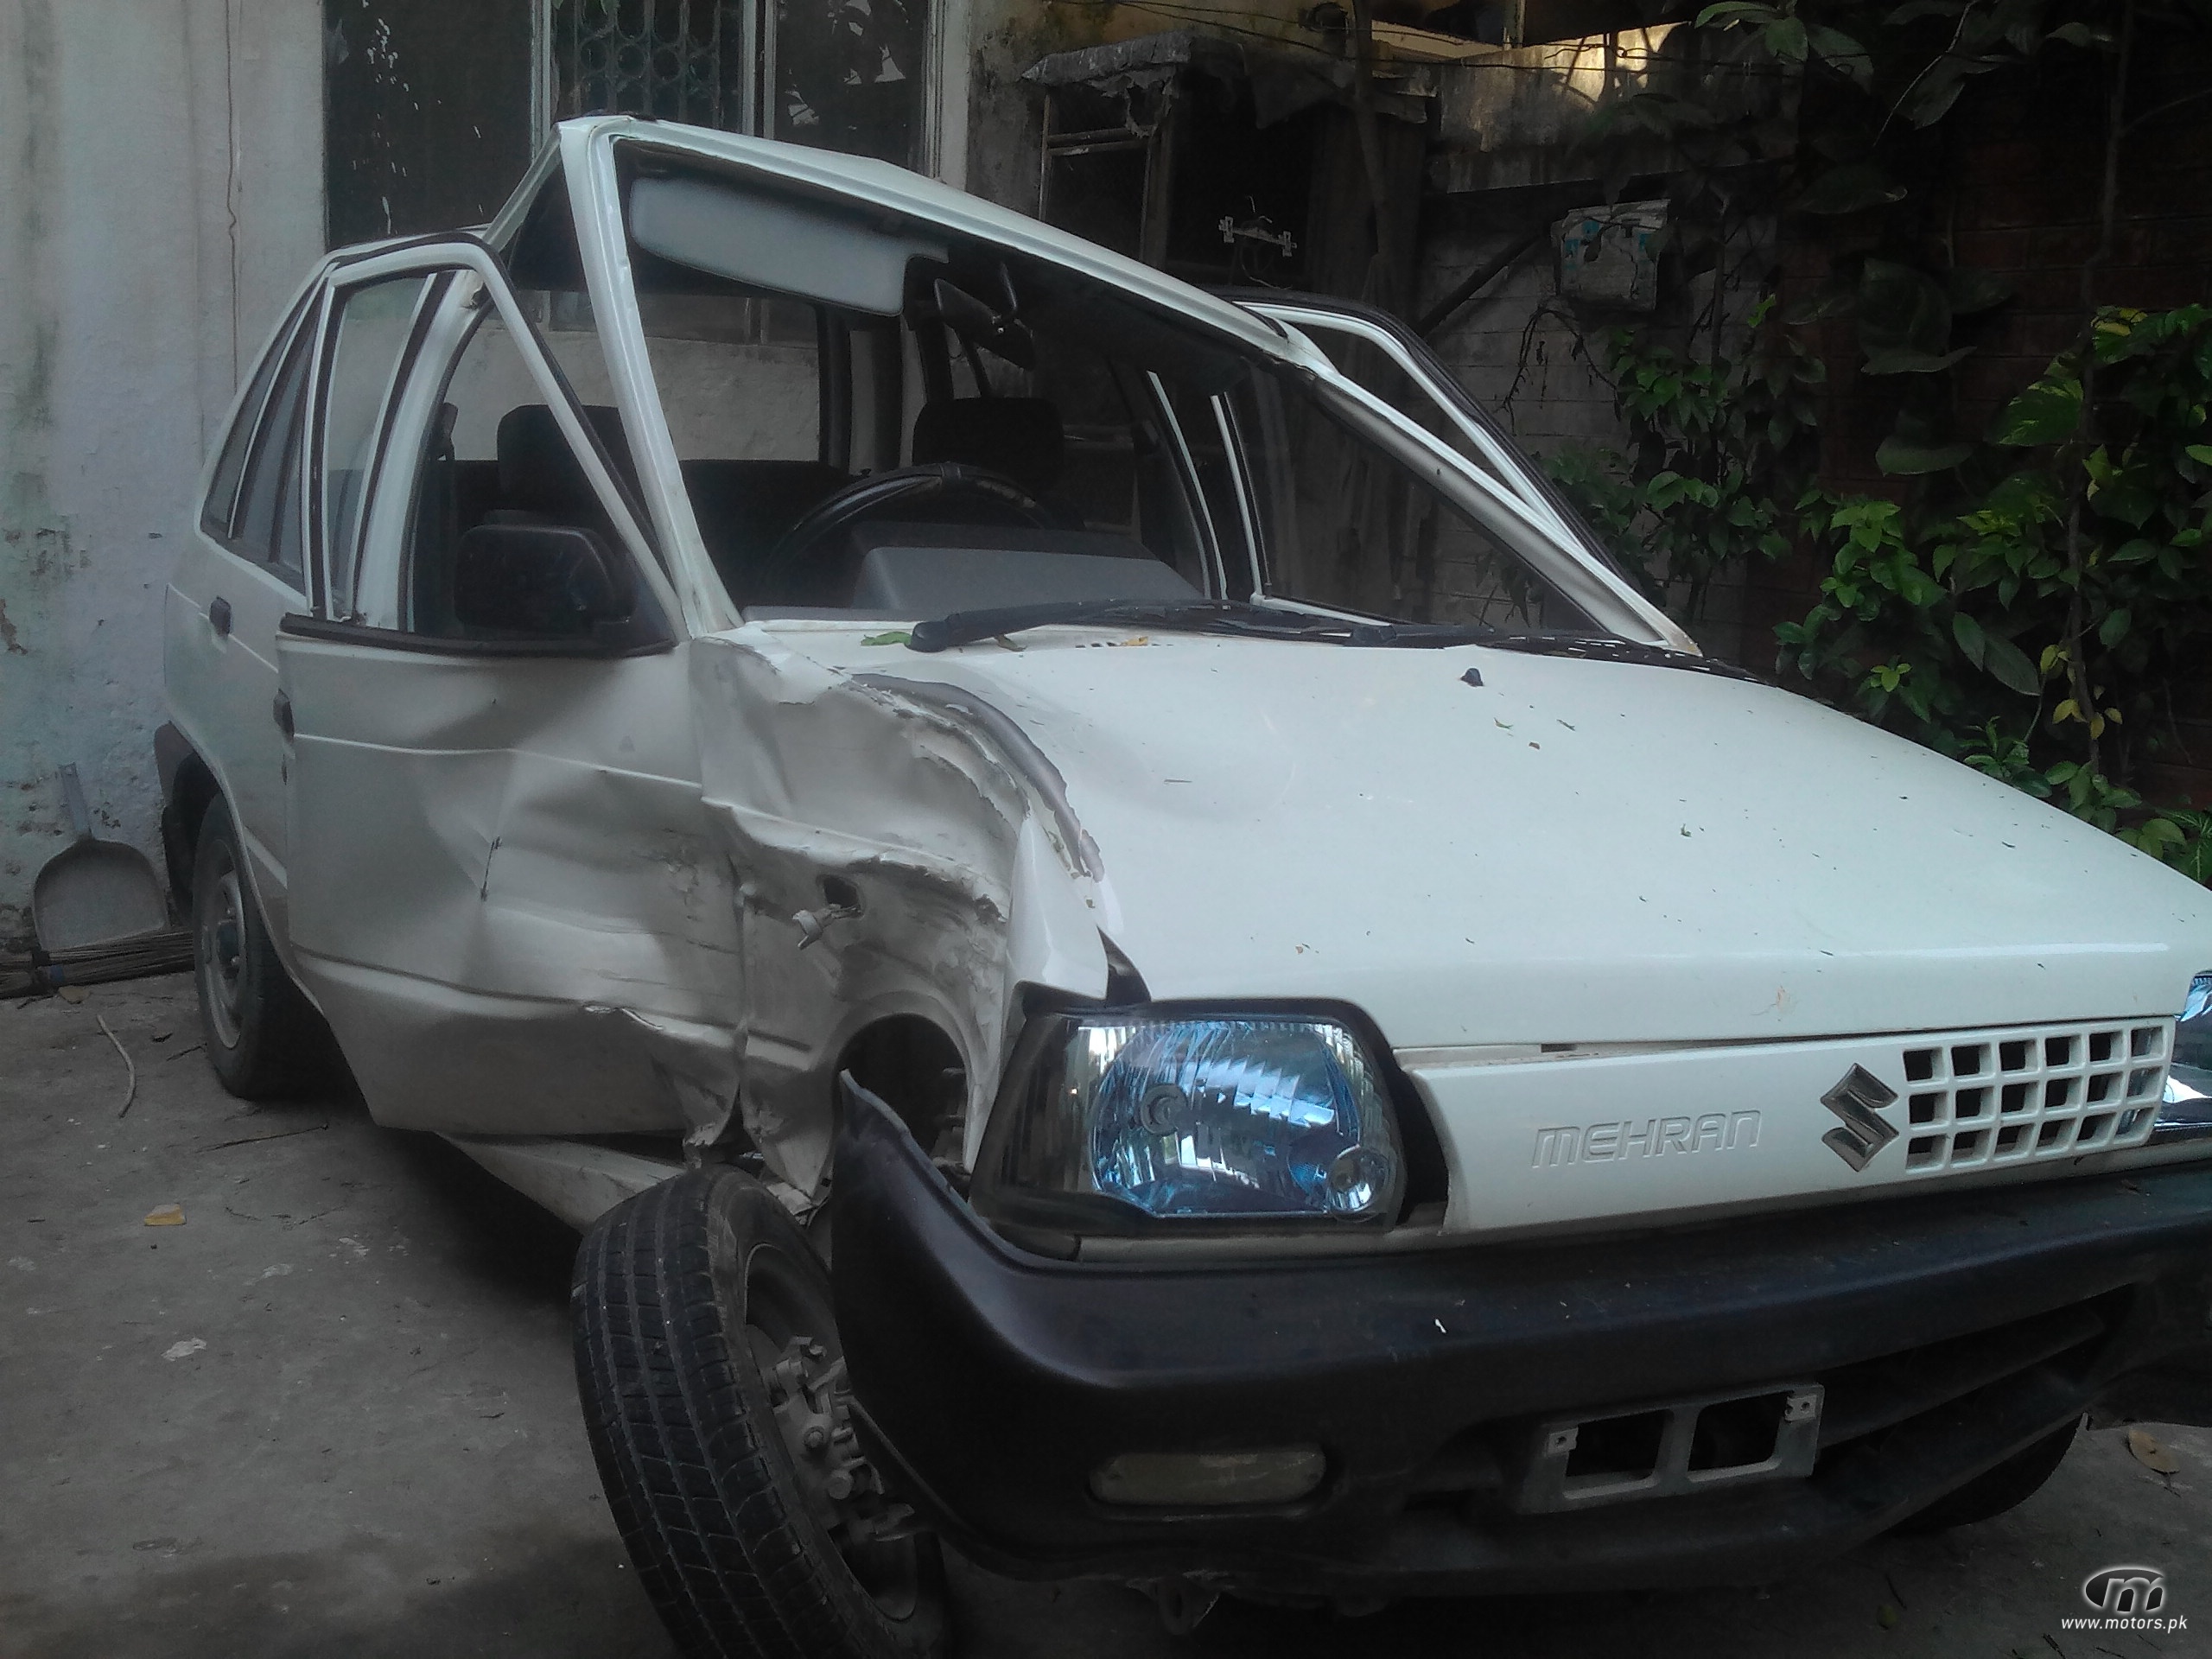 Used Suzuki Mehran 2012 For Sale in Islamabad Ad 7938 Motors.pk